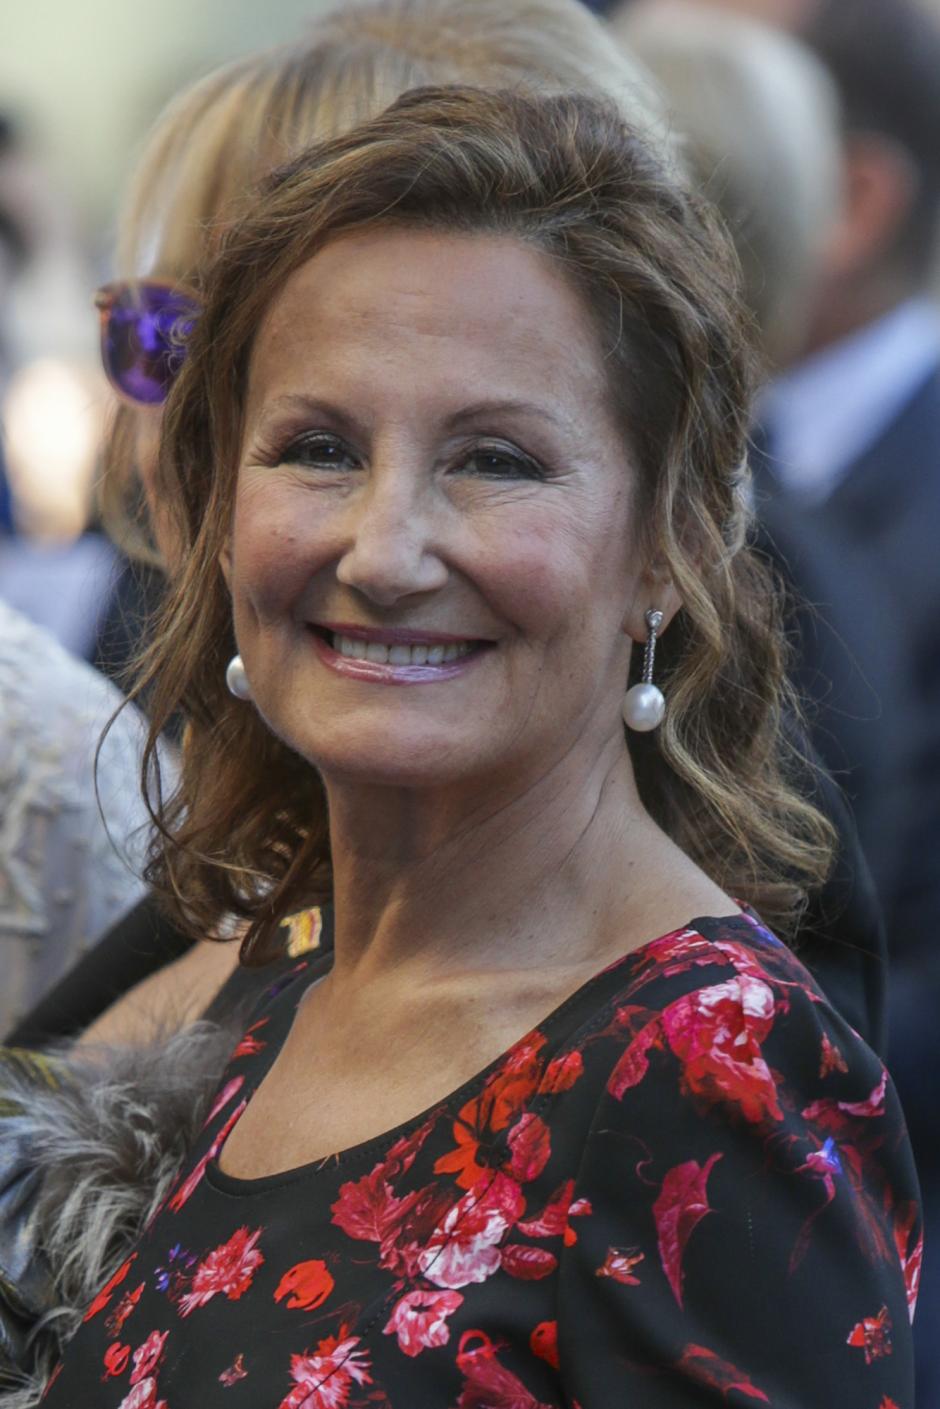 Paloma Rocasolano during the Princess of Asturias Awards 2017 in Oviedo, on Friday 20th October 2017